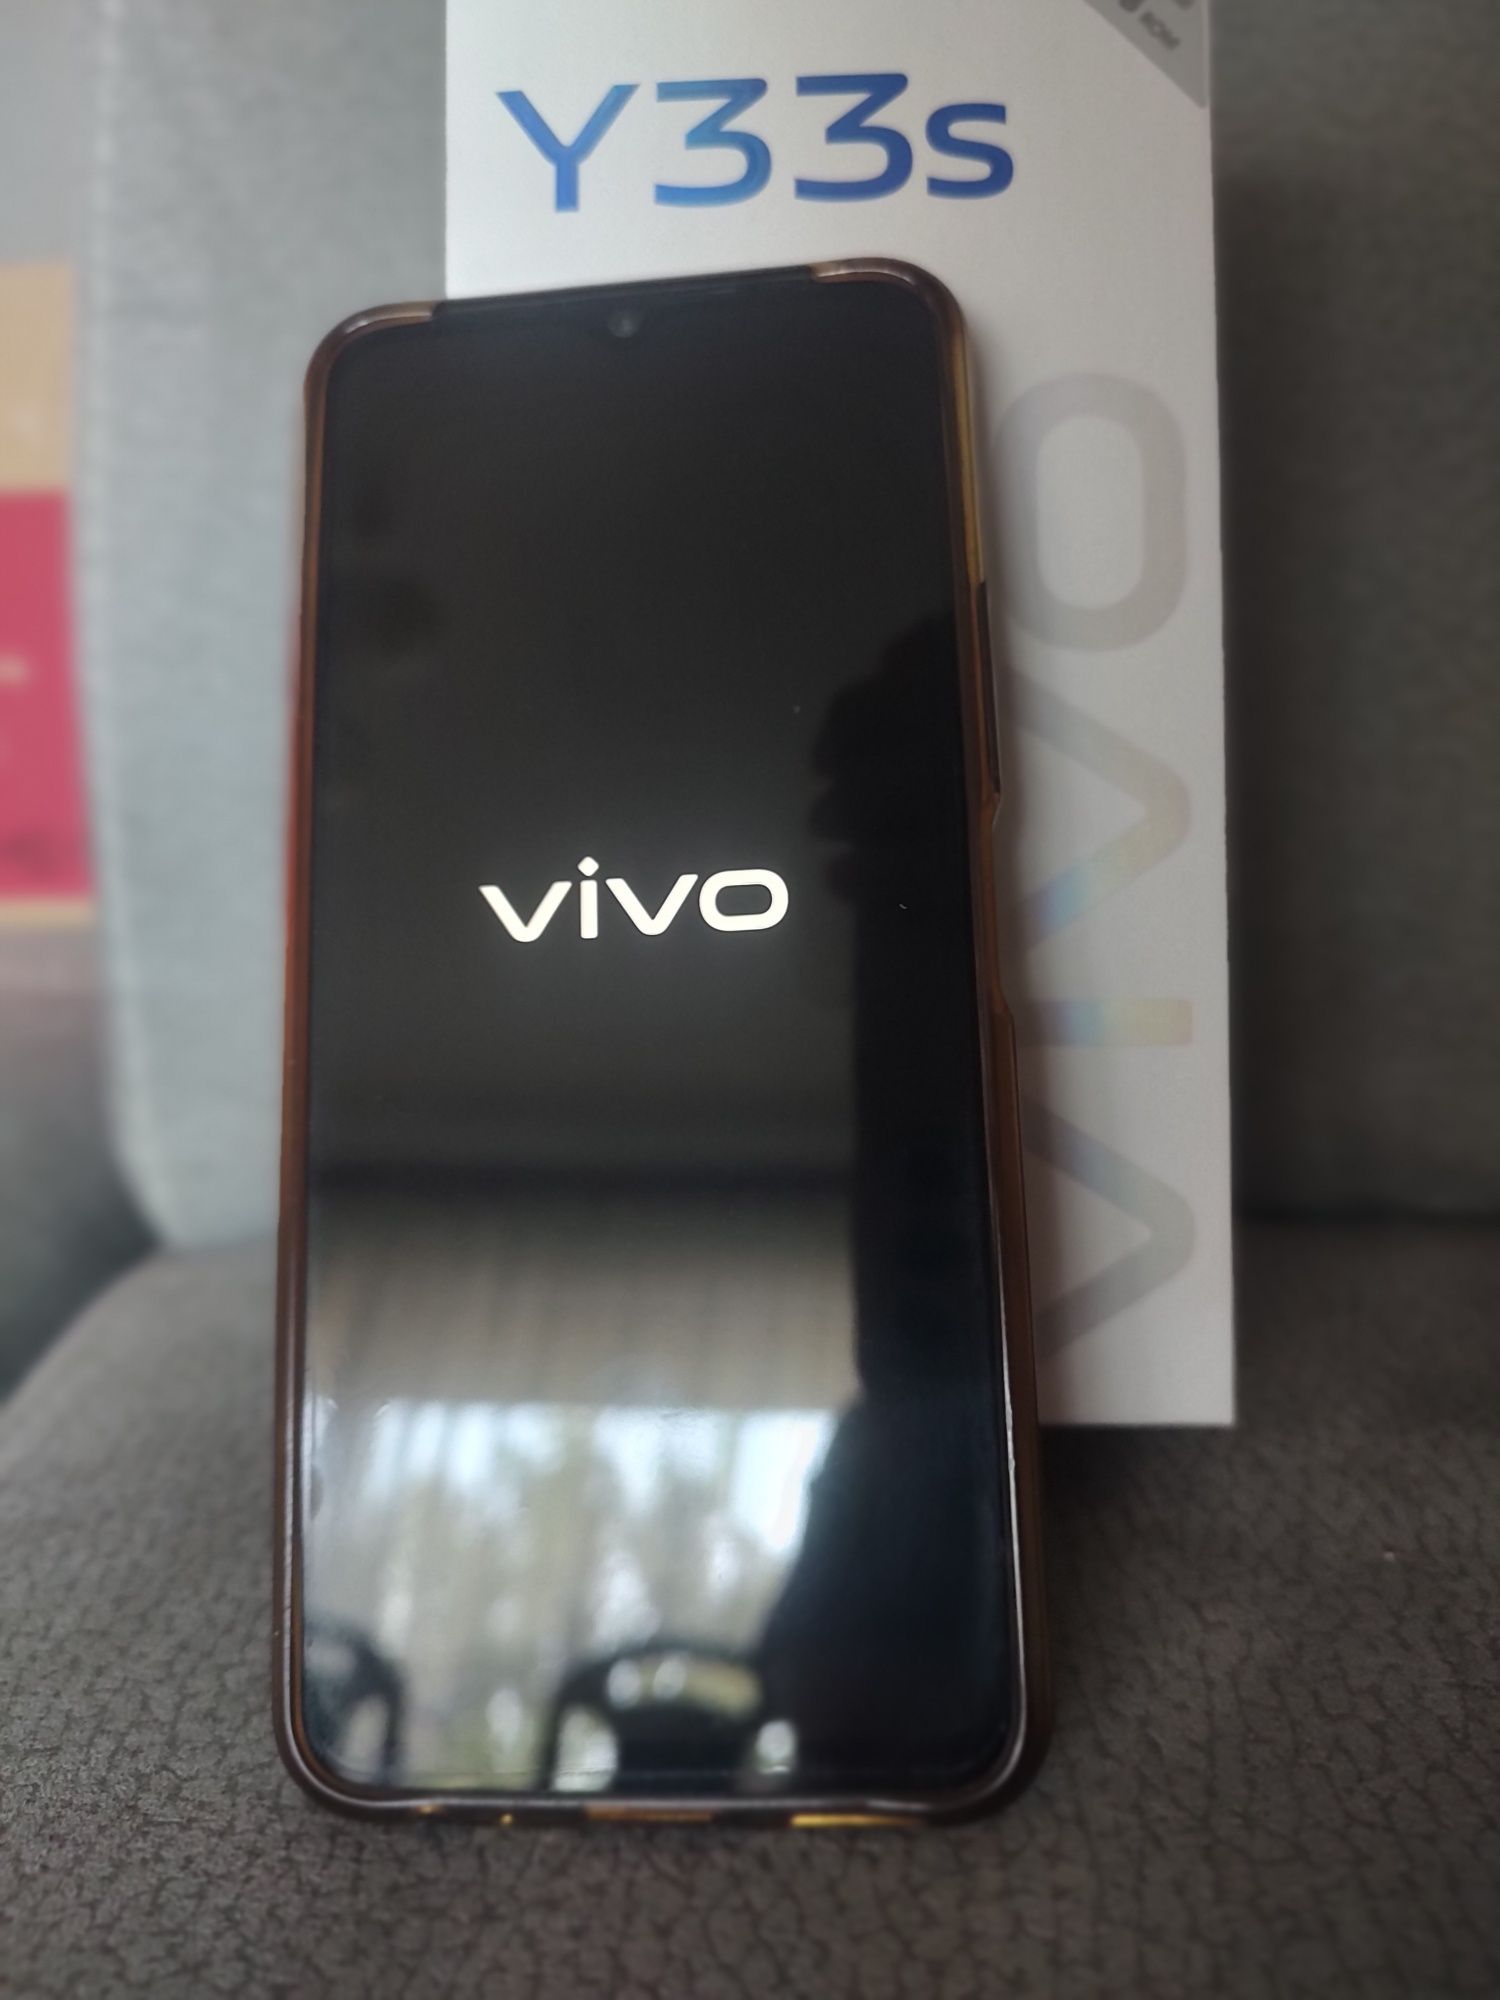 Smartfon VIVO Y33 S bardzo dobry stan 2 sztuki